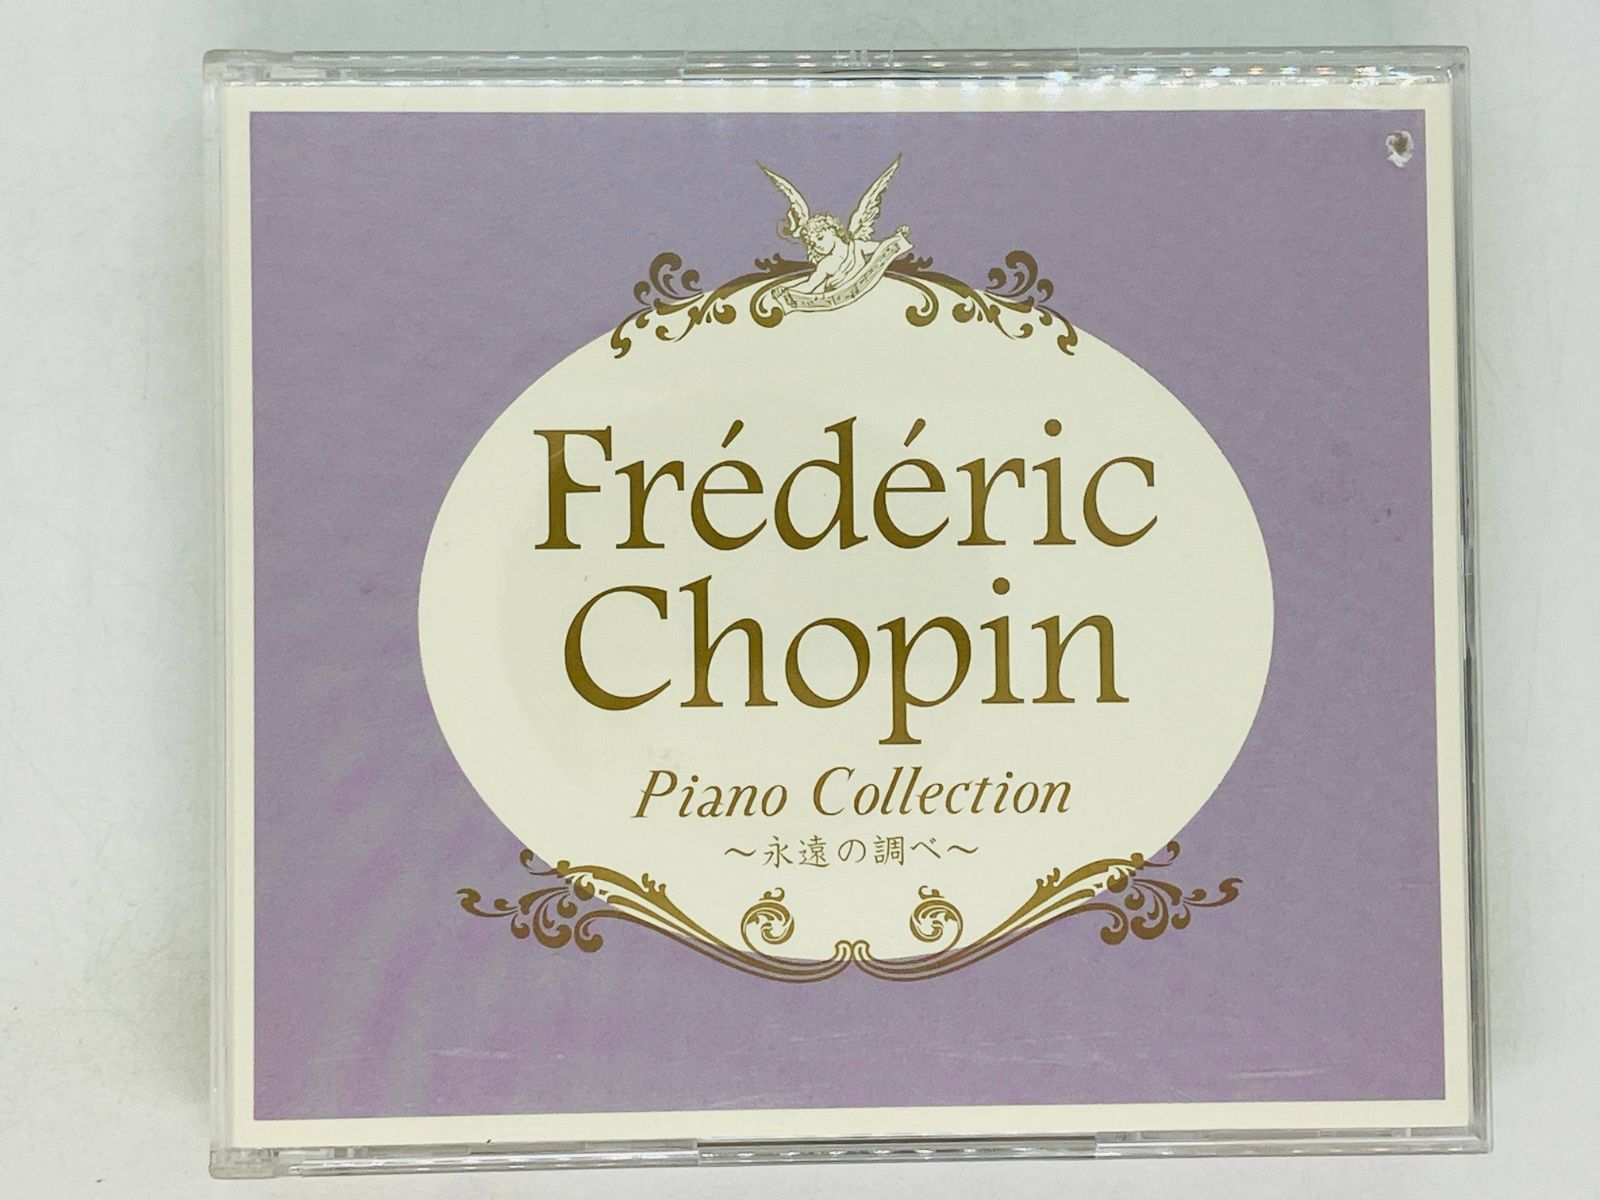 3CD Chopin Piano Collection 永遠の調べ / 英雄ポロネーズ 幻想即興曲 夜想曲 アルバム F02 - TOTAL CD  SHOP - メルカリ